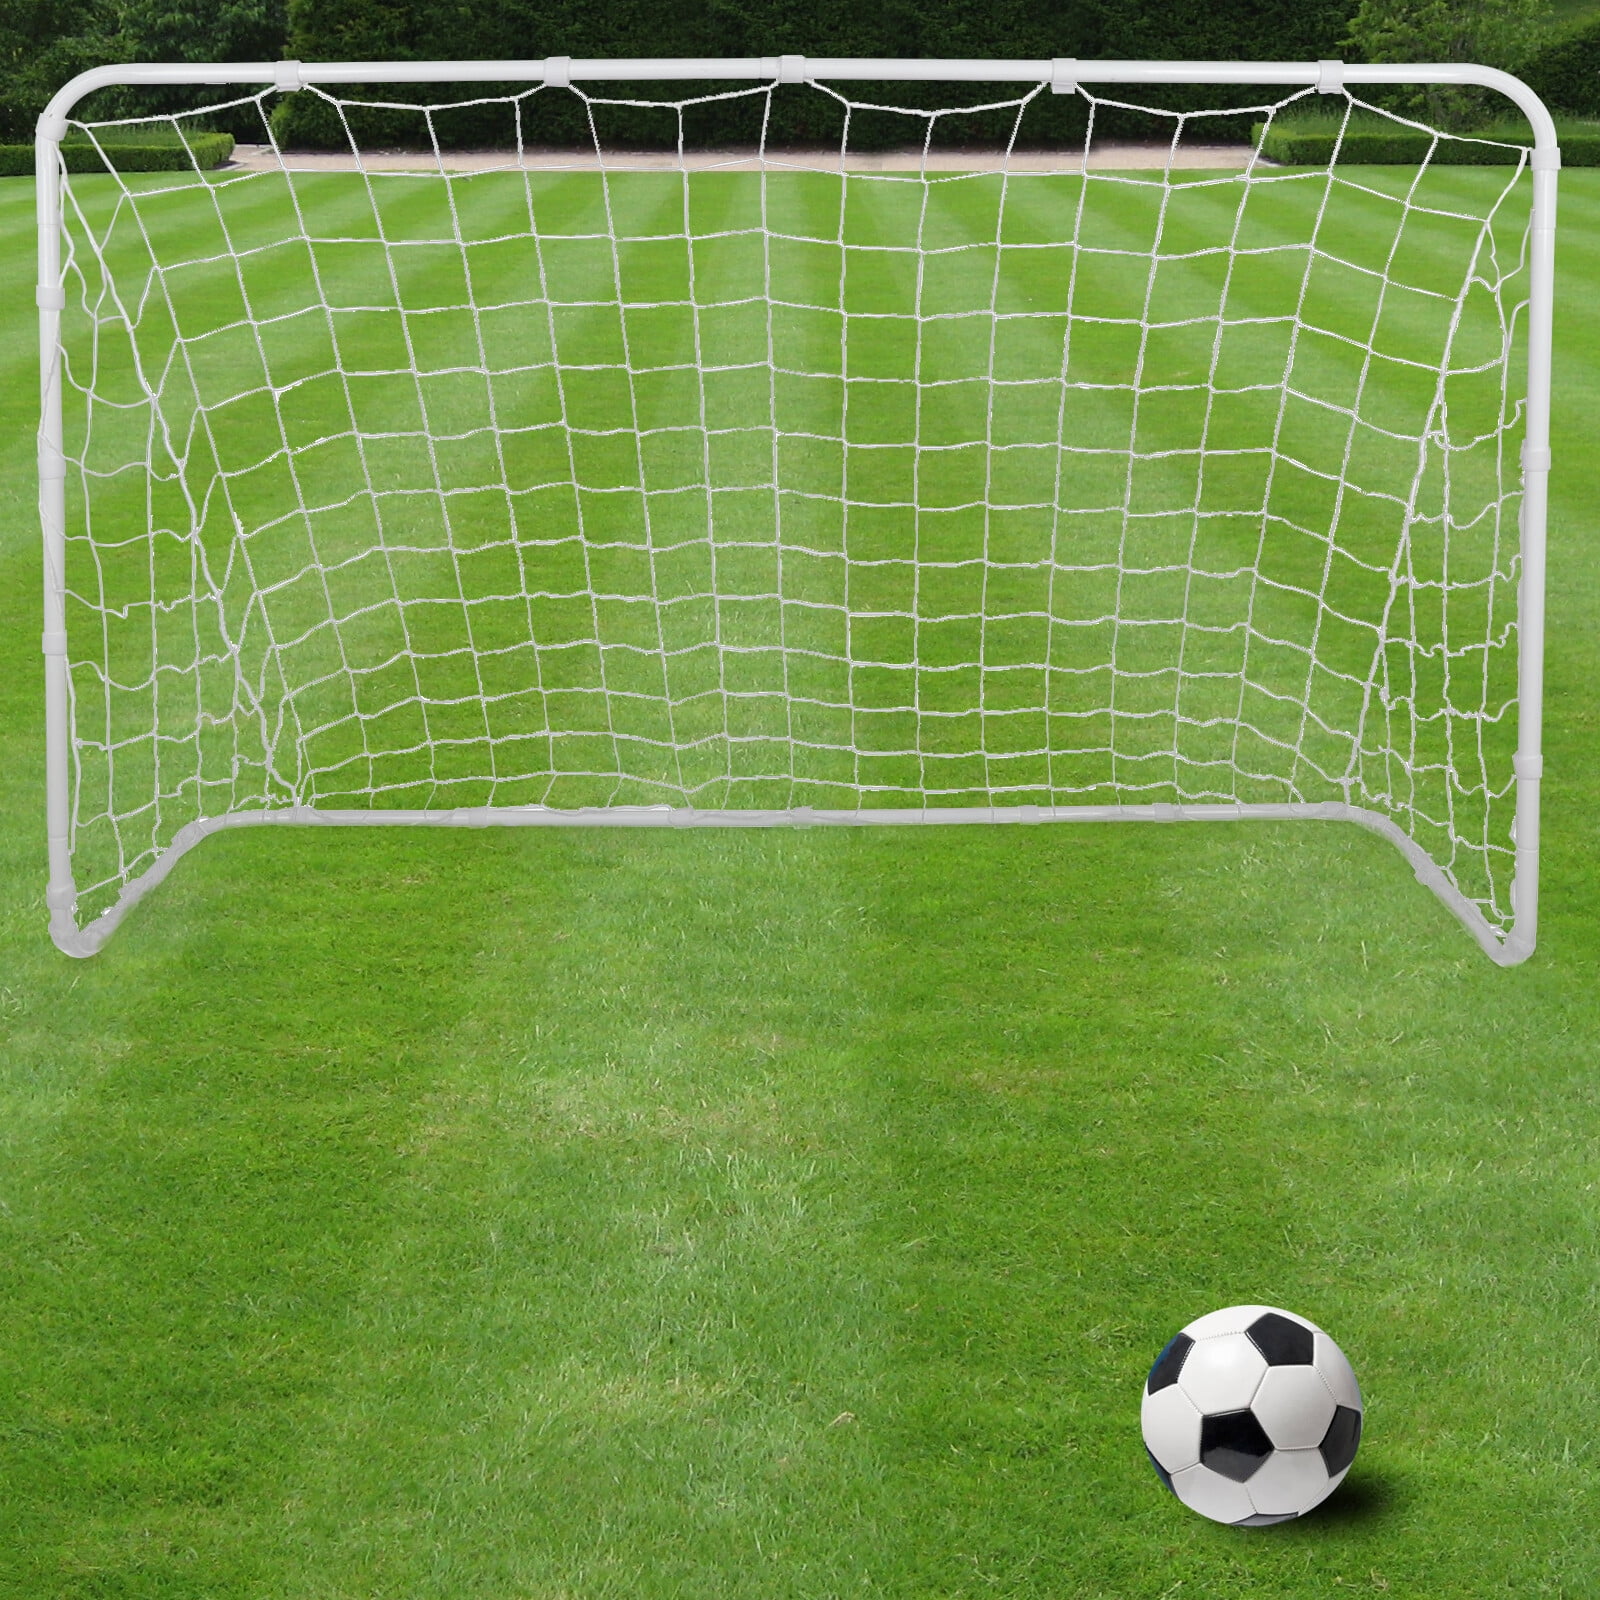 2pcs Portable Soccer Goal Net Frame Backyard Football Training Set+Football 